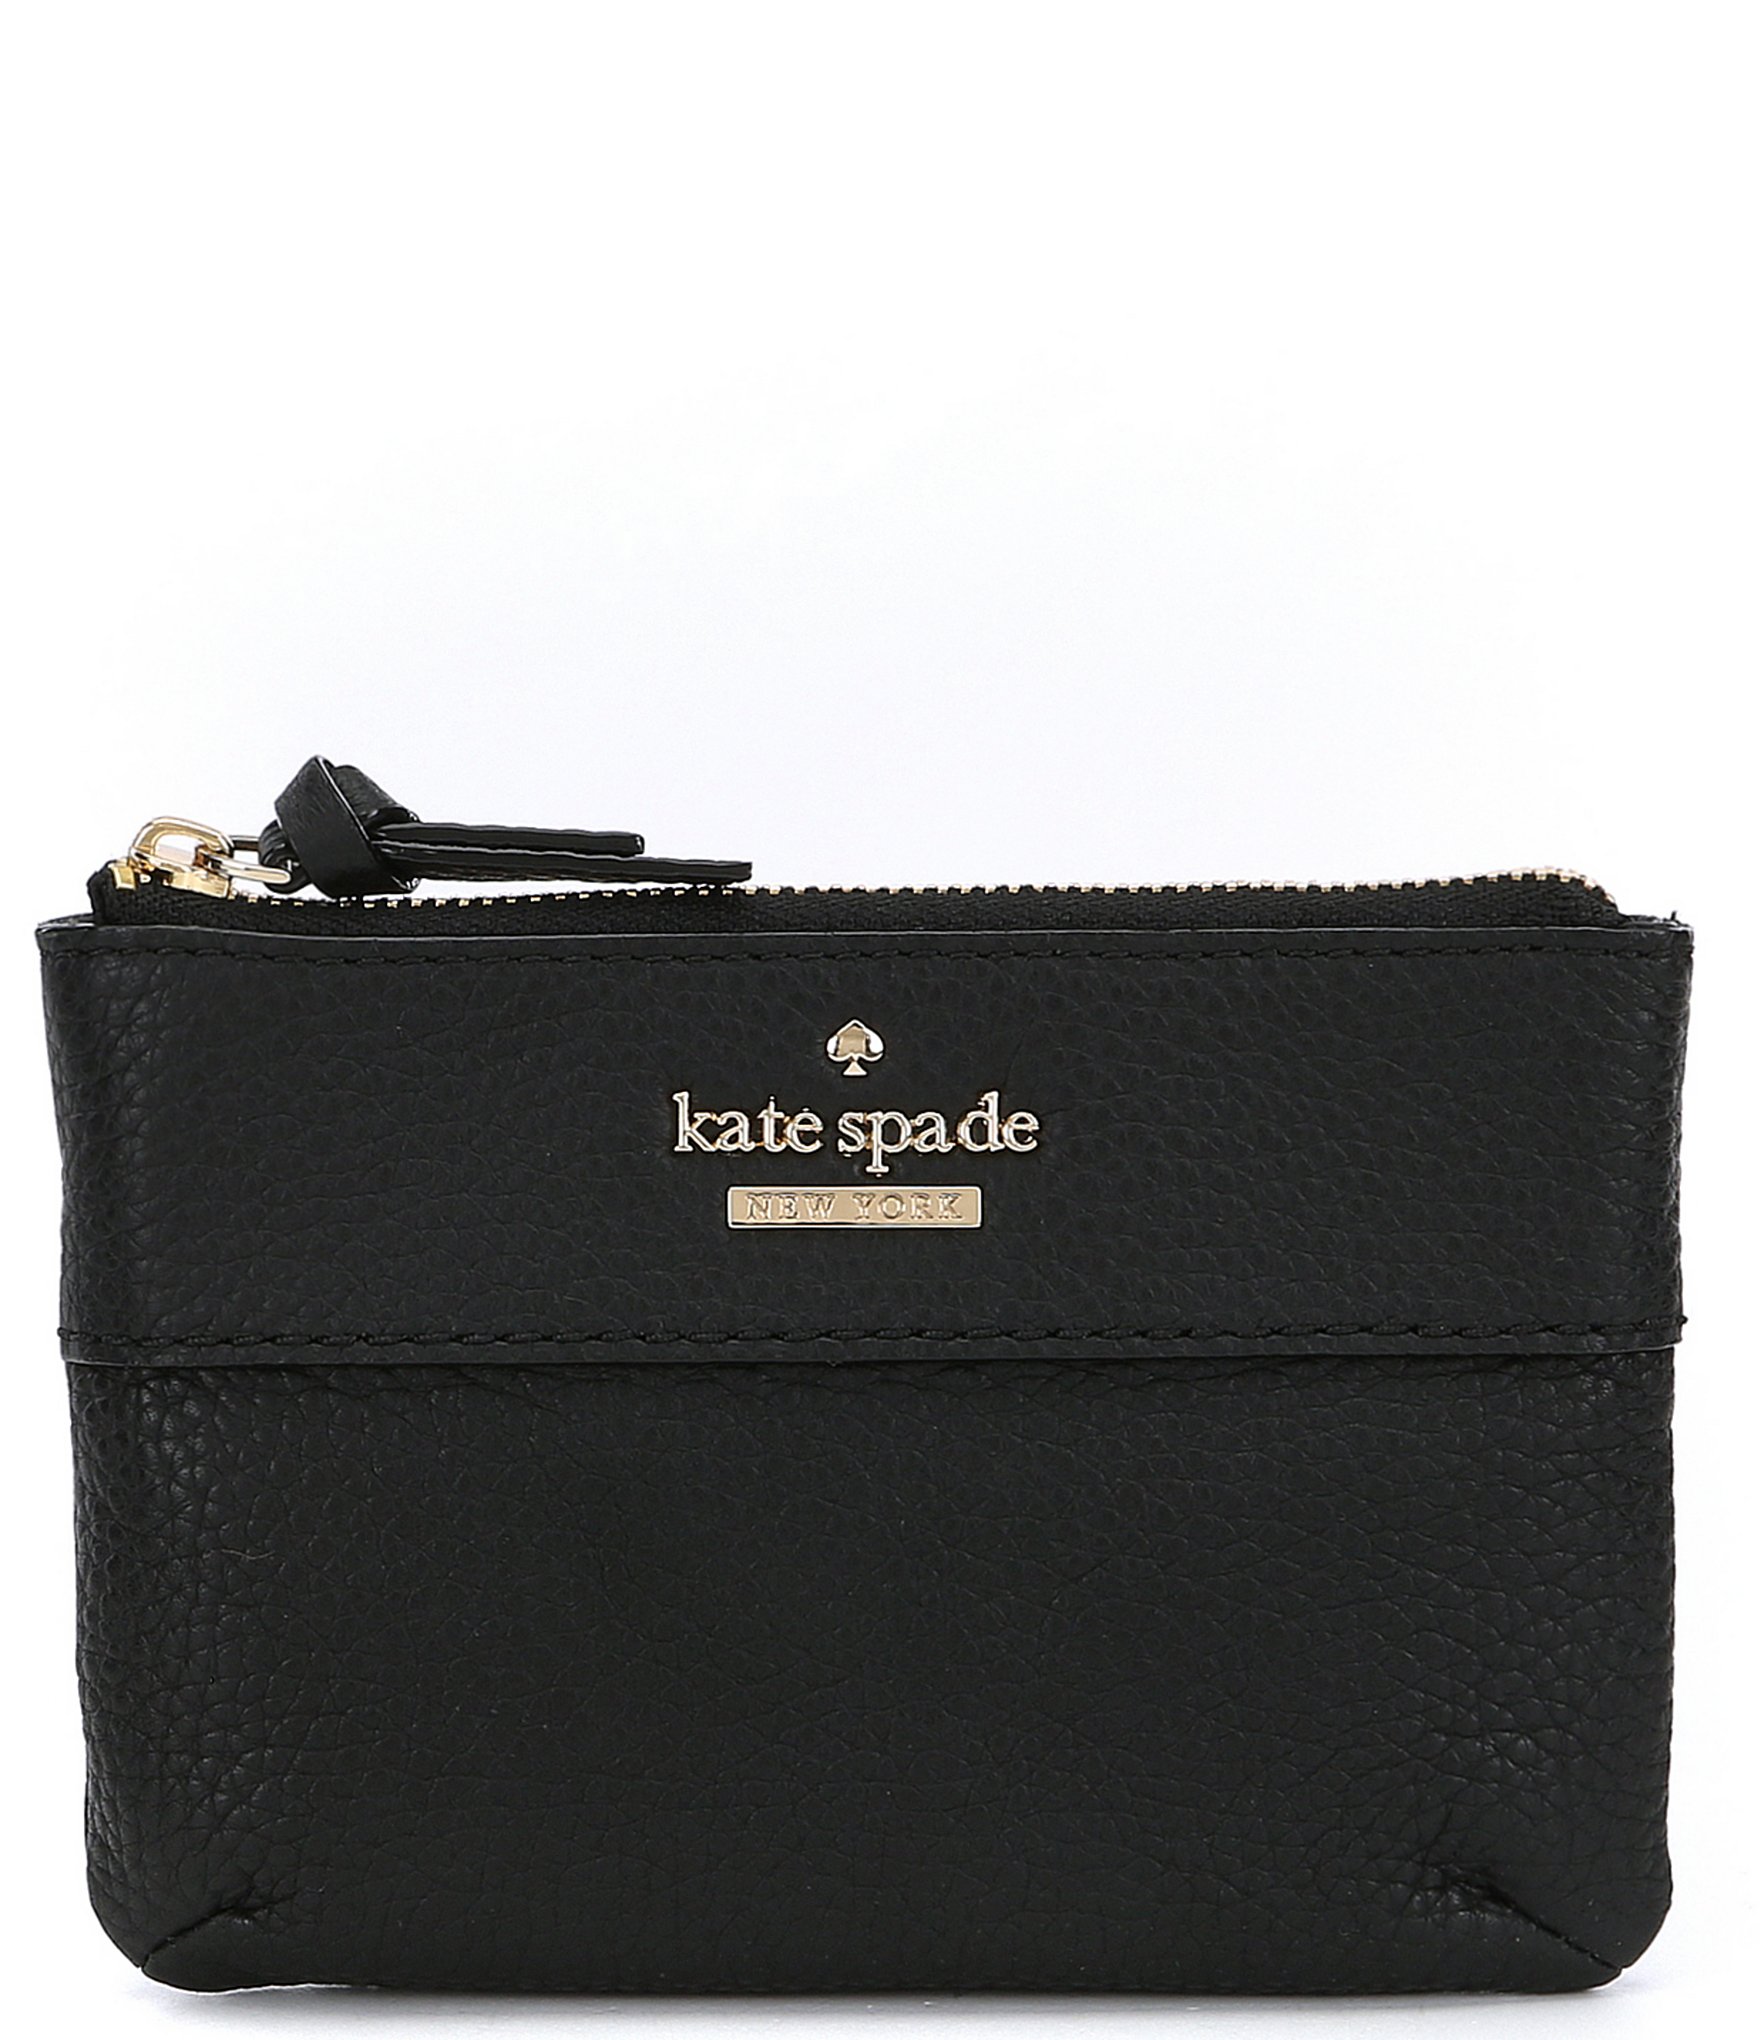 Handbags | Small Bags & Cases | Coin Purses | Dillards.com